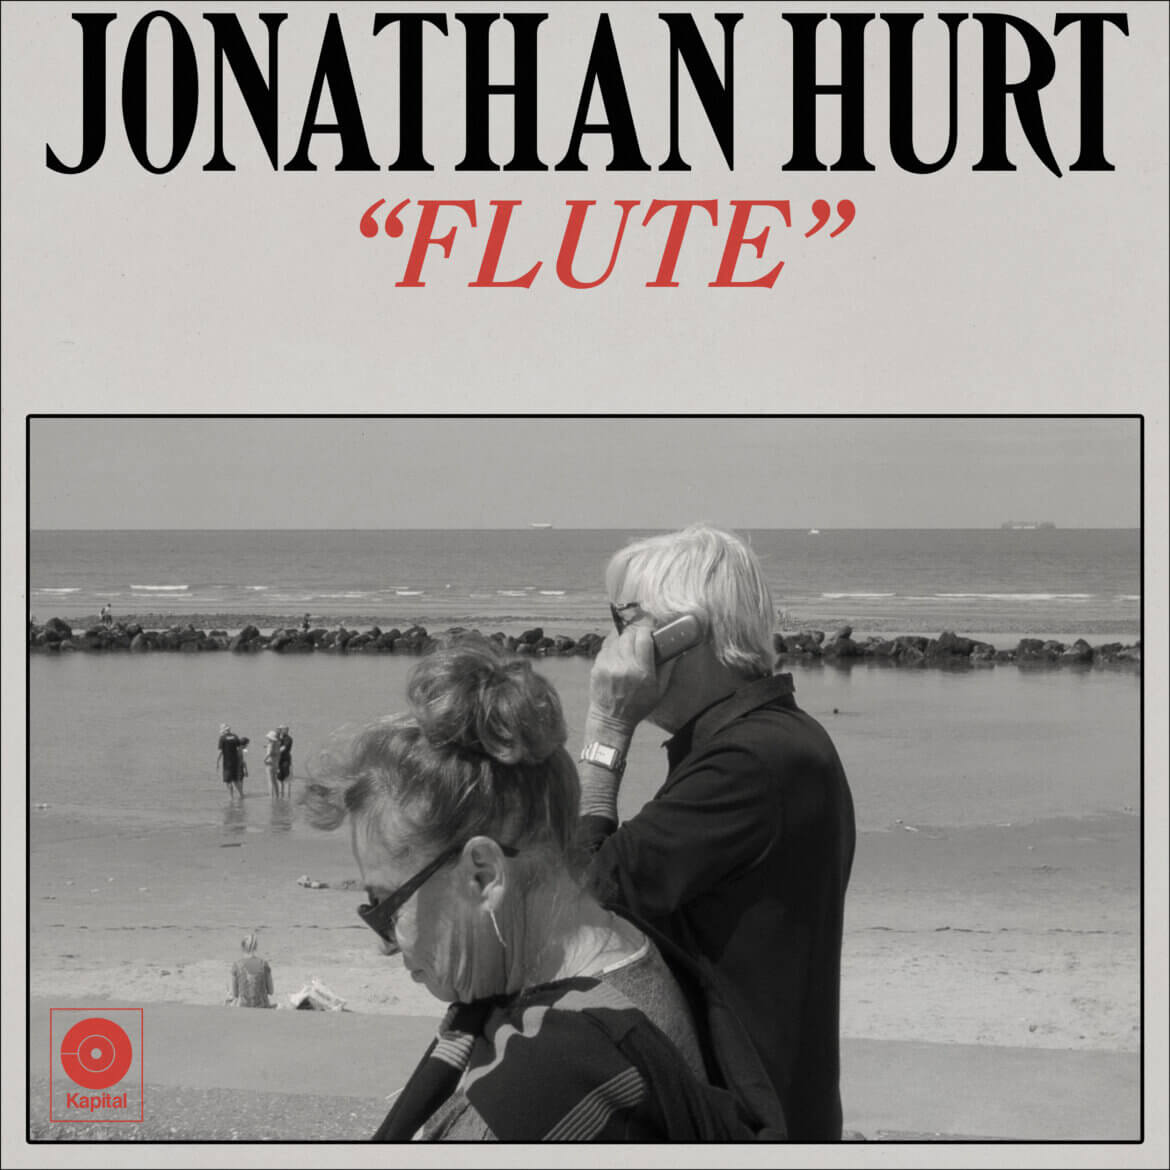 Jonathan Hurt | Flute